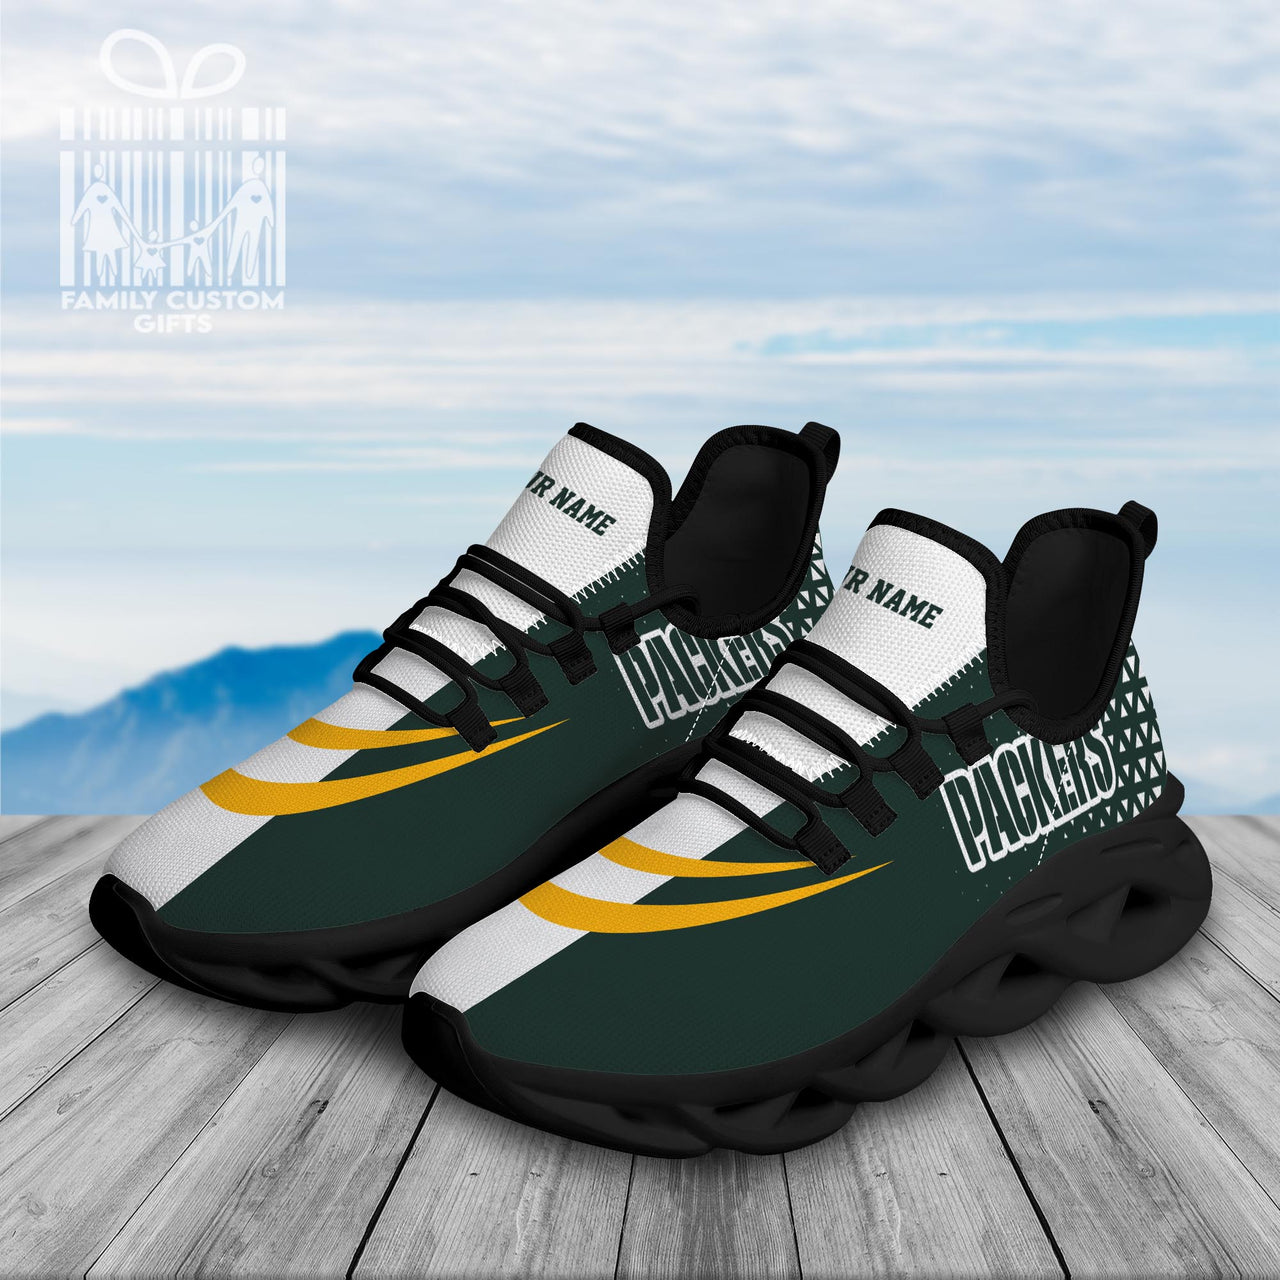 Familycustom Gifts, Green Bay Packers Custom Personalized Max Soul Sneakers Running Sport Shoes for Men Women, Men's Sneakers Black / US13 (EU47)